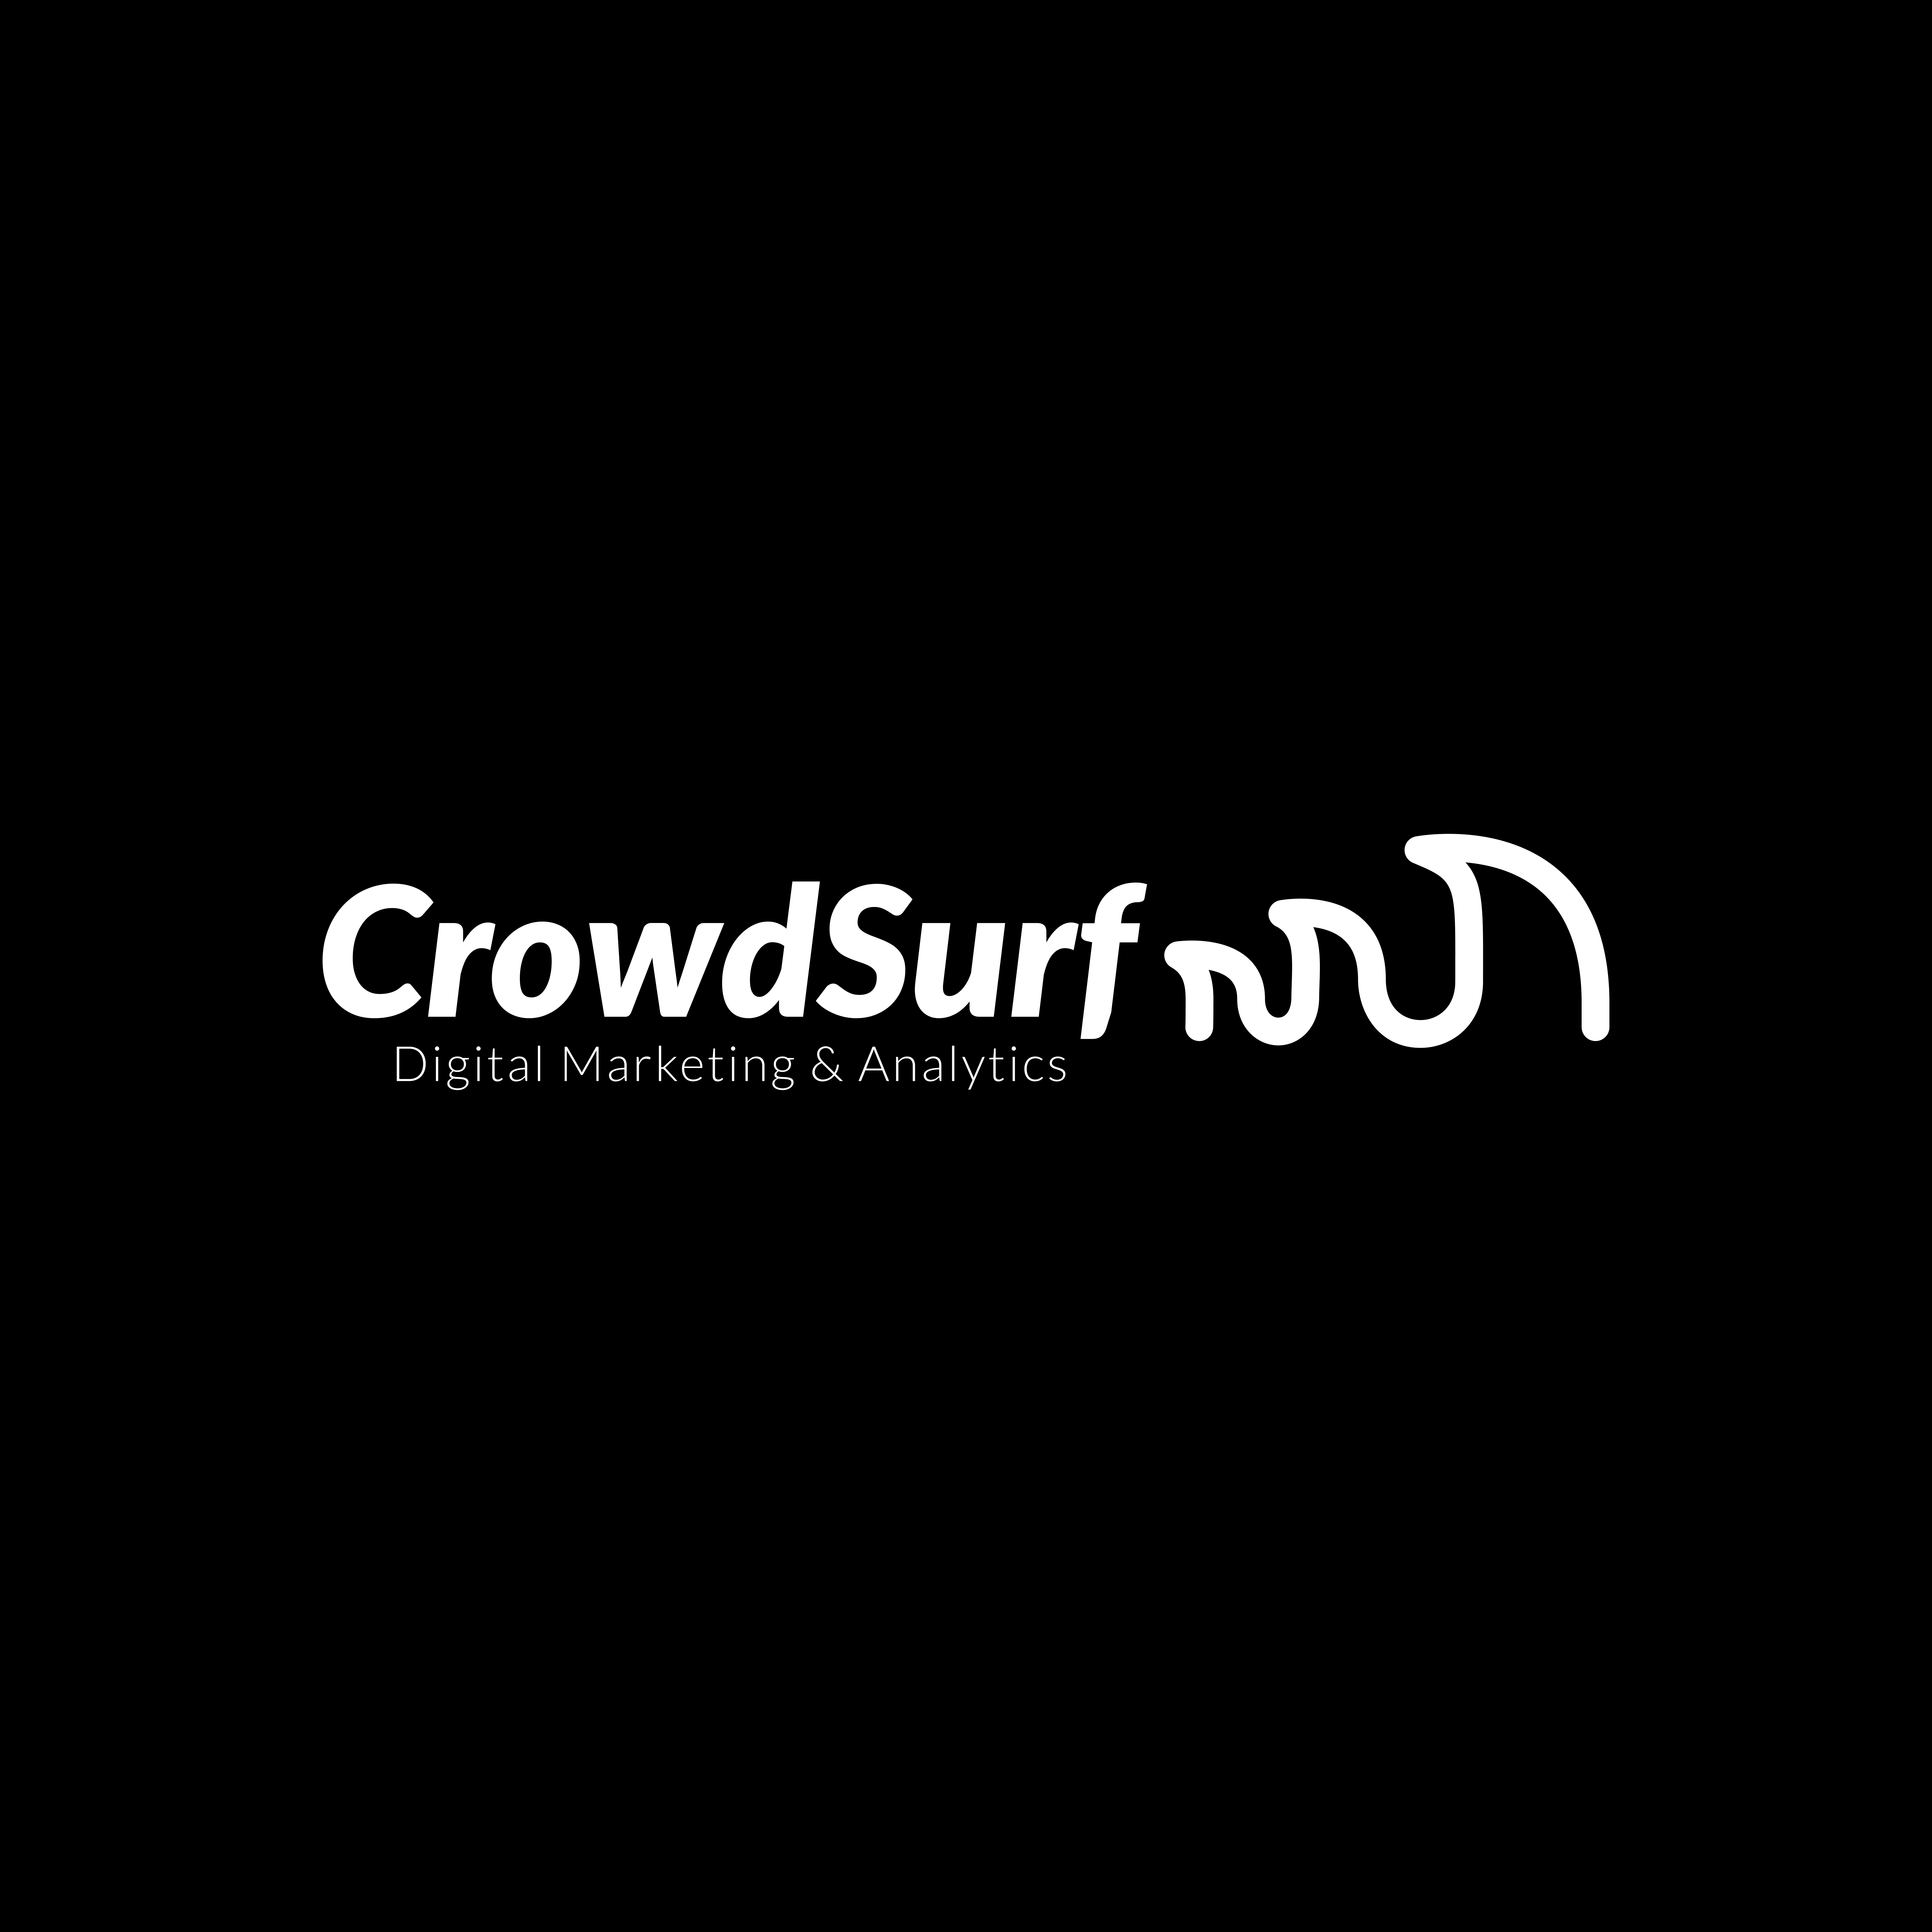 CrowdSurf, LLC profile on Qualified.One